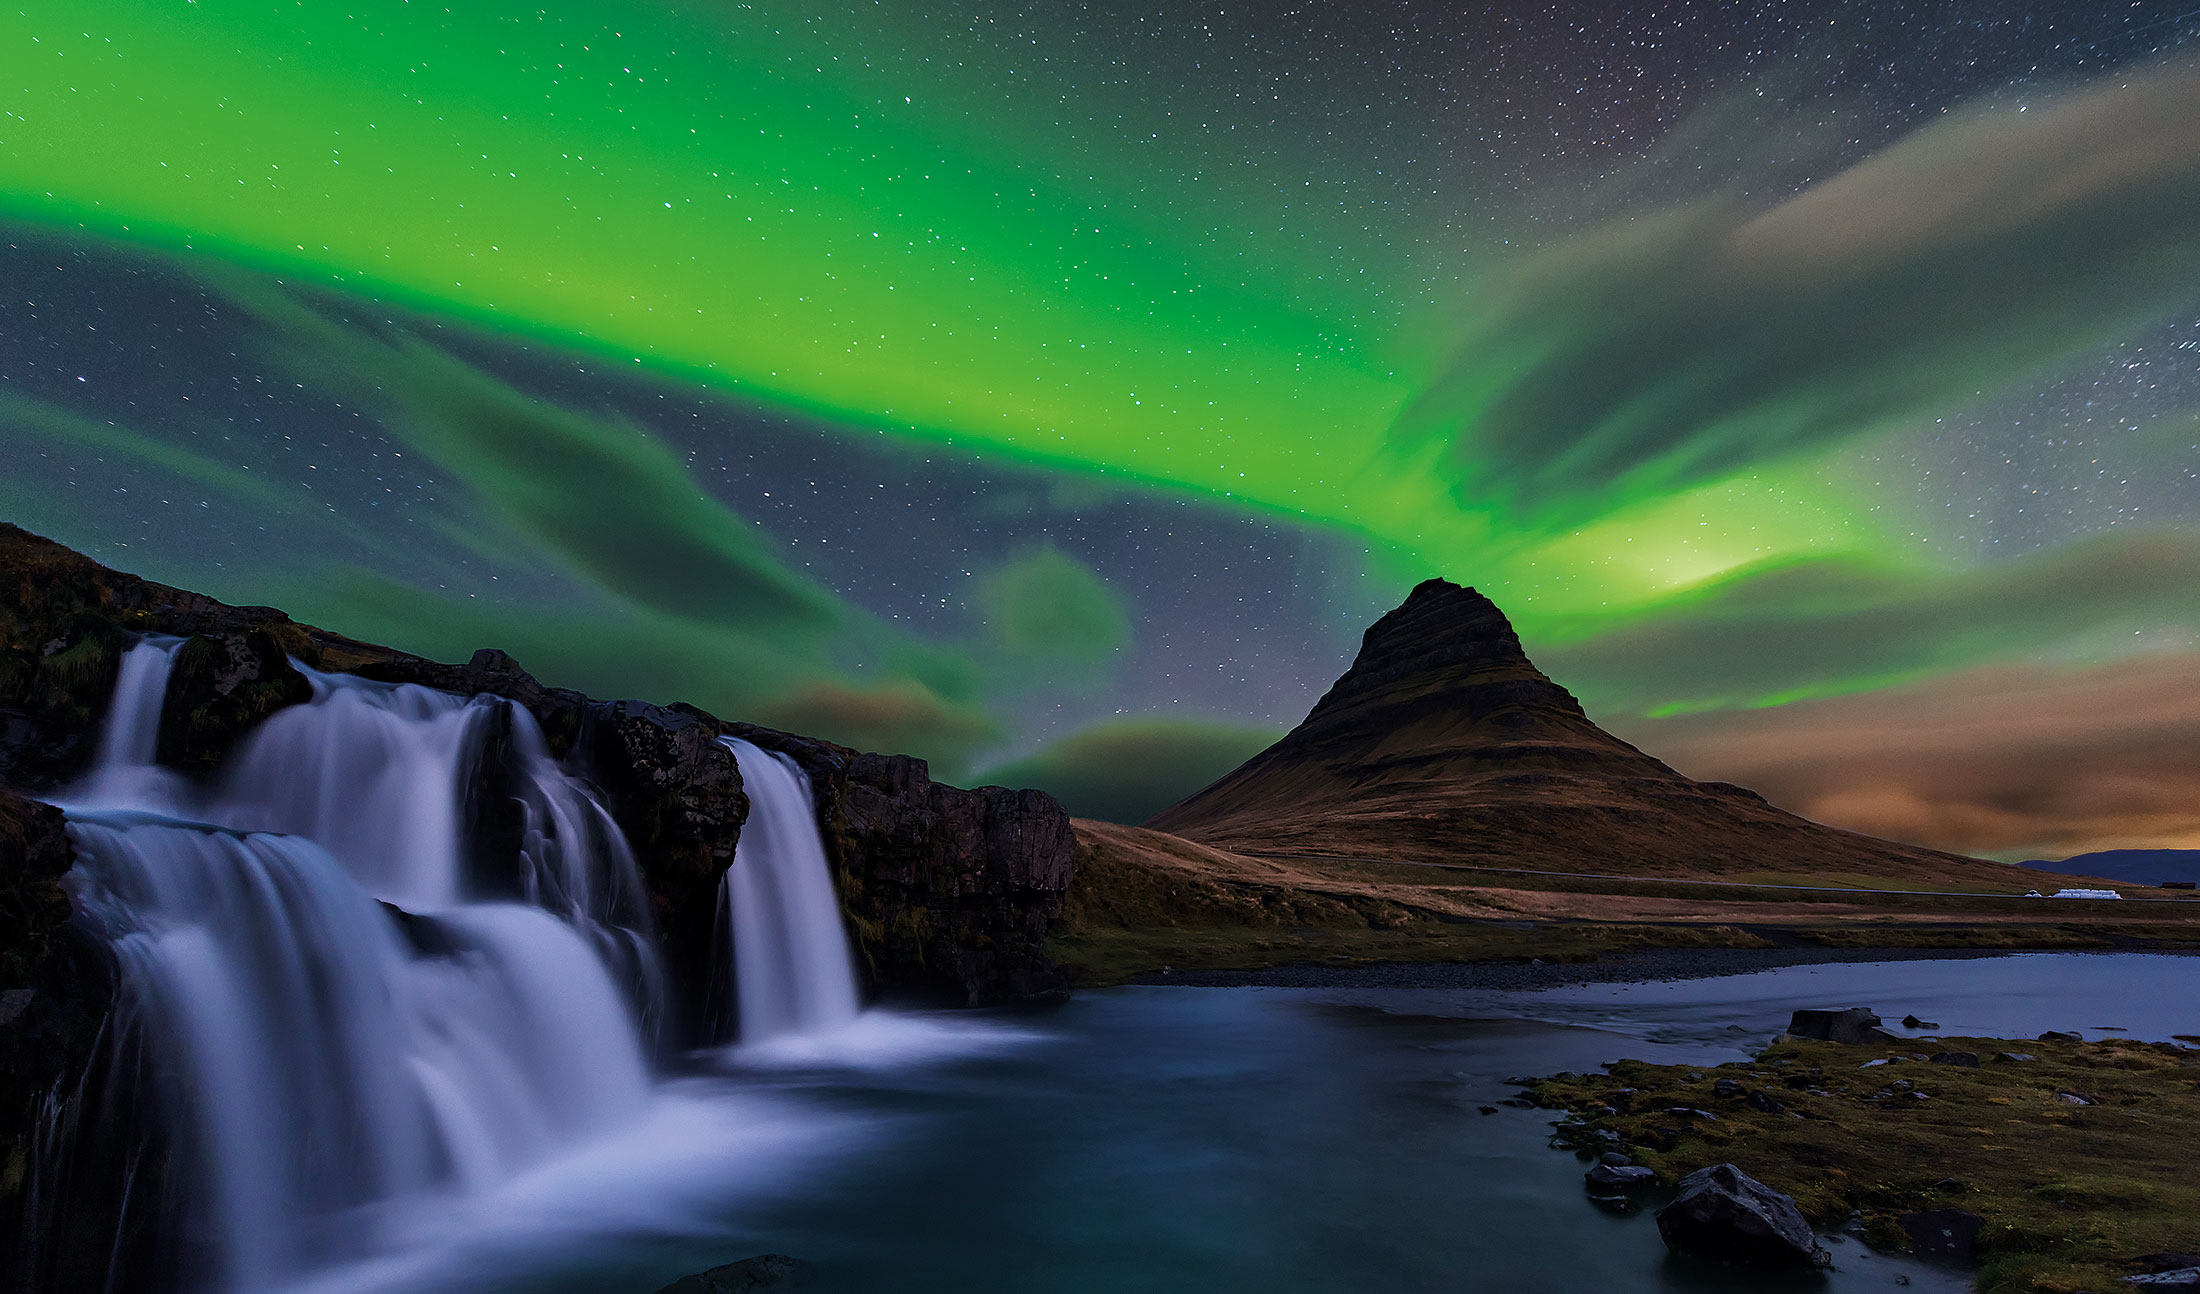 Iceland’s tourism boom